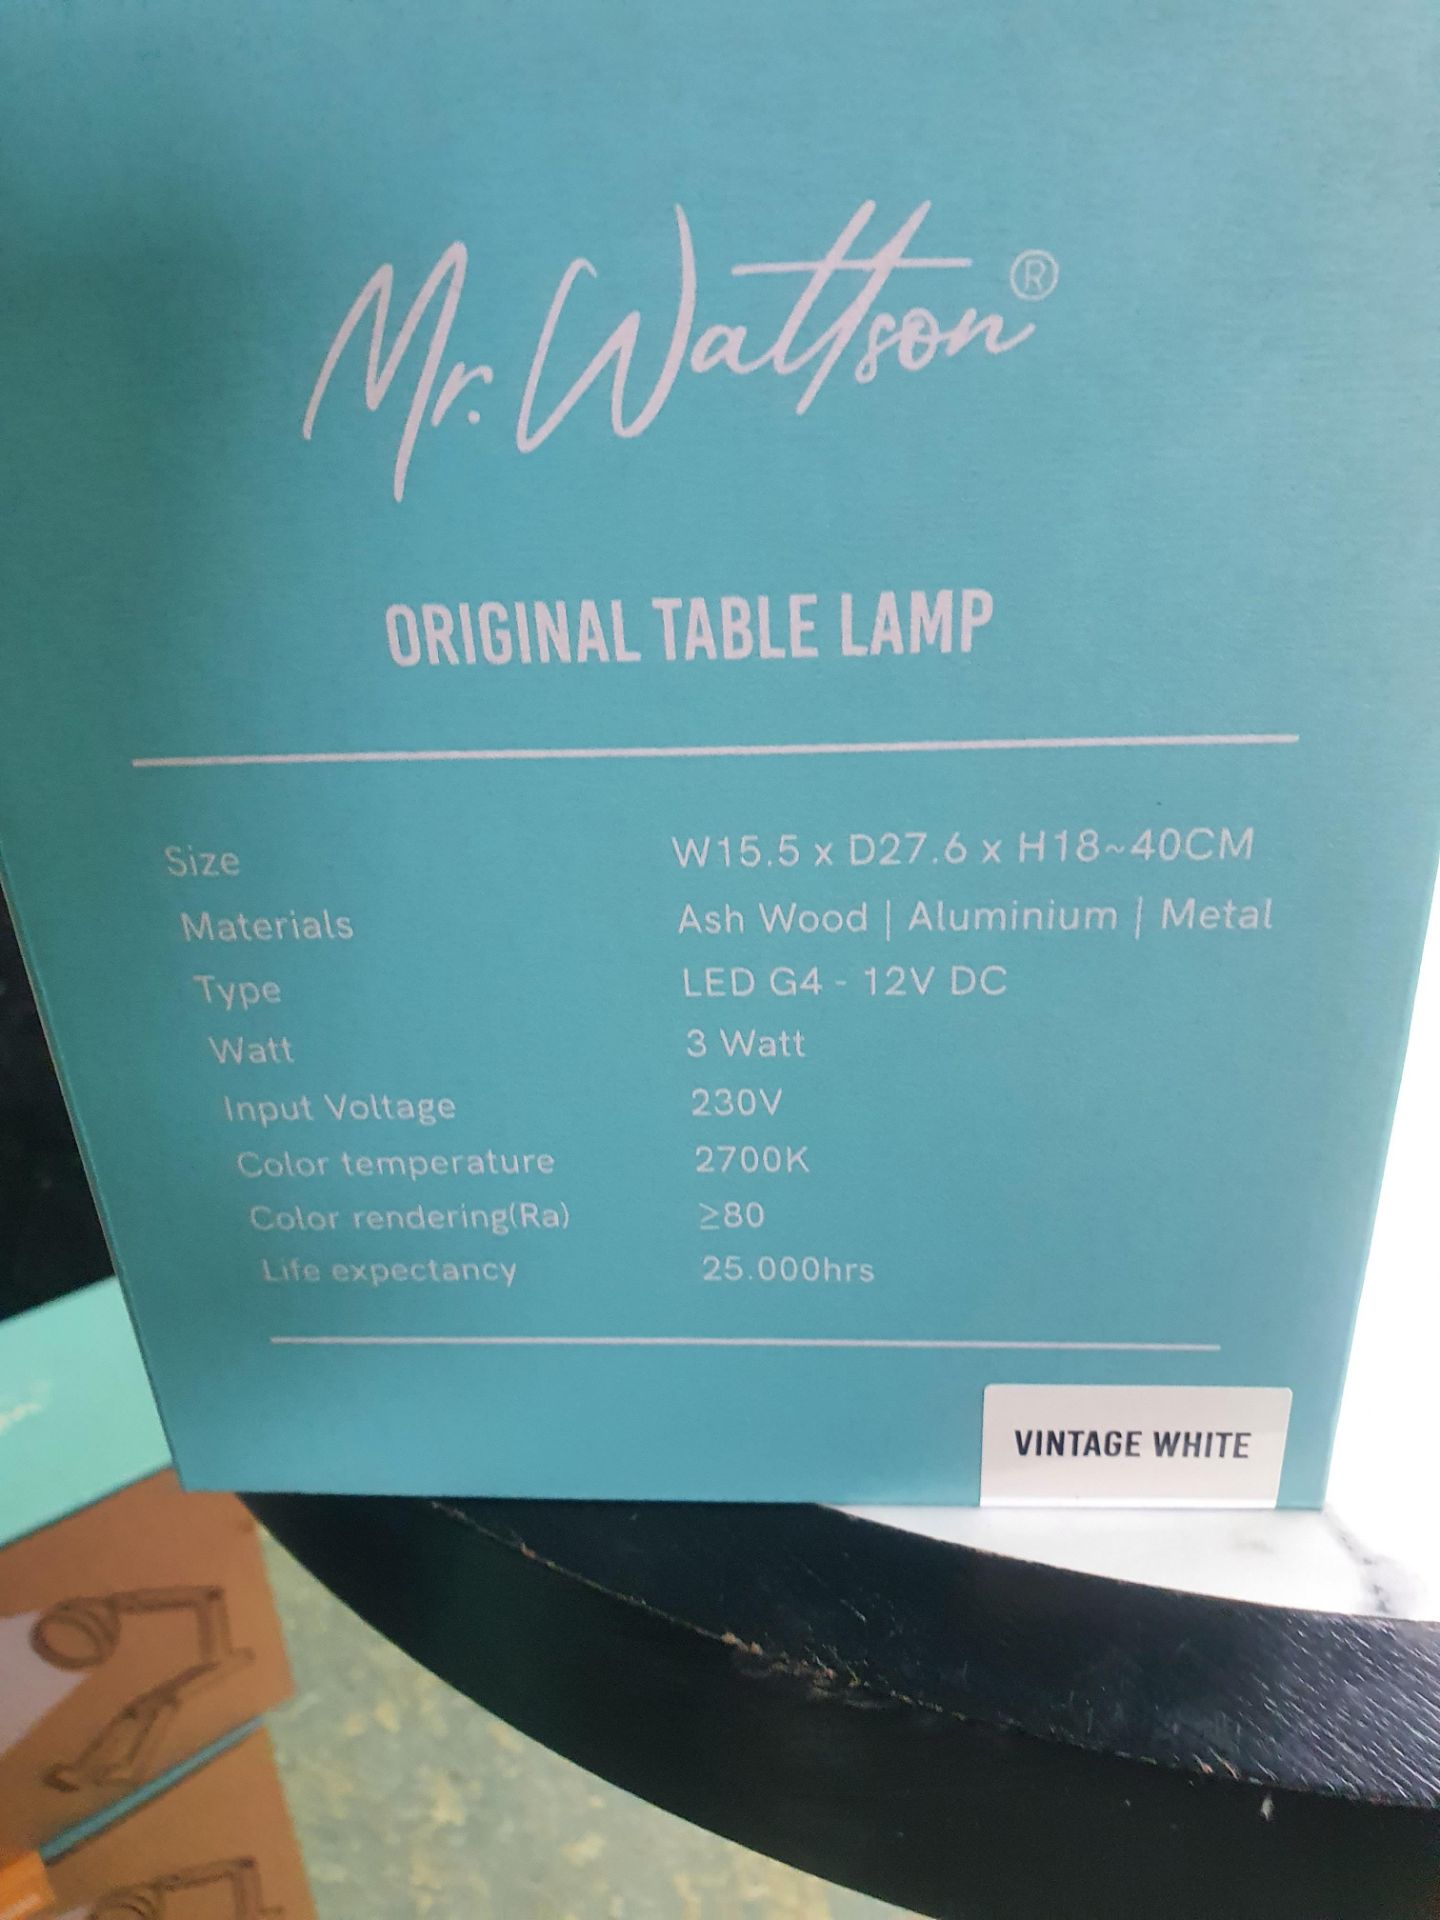 1 x Mr Wattson Original Table Lamp in McLaren Orange - New/Boxed Stock - Ref: TCH109 - CL840 - Locat - Image 4 of 6